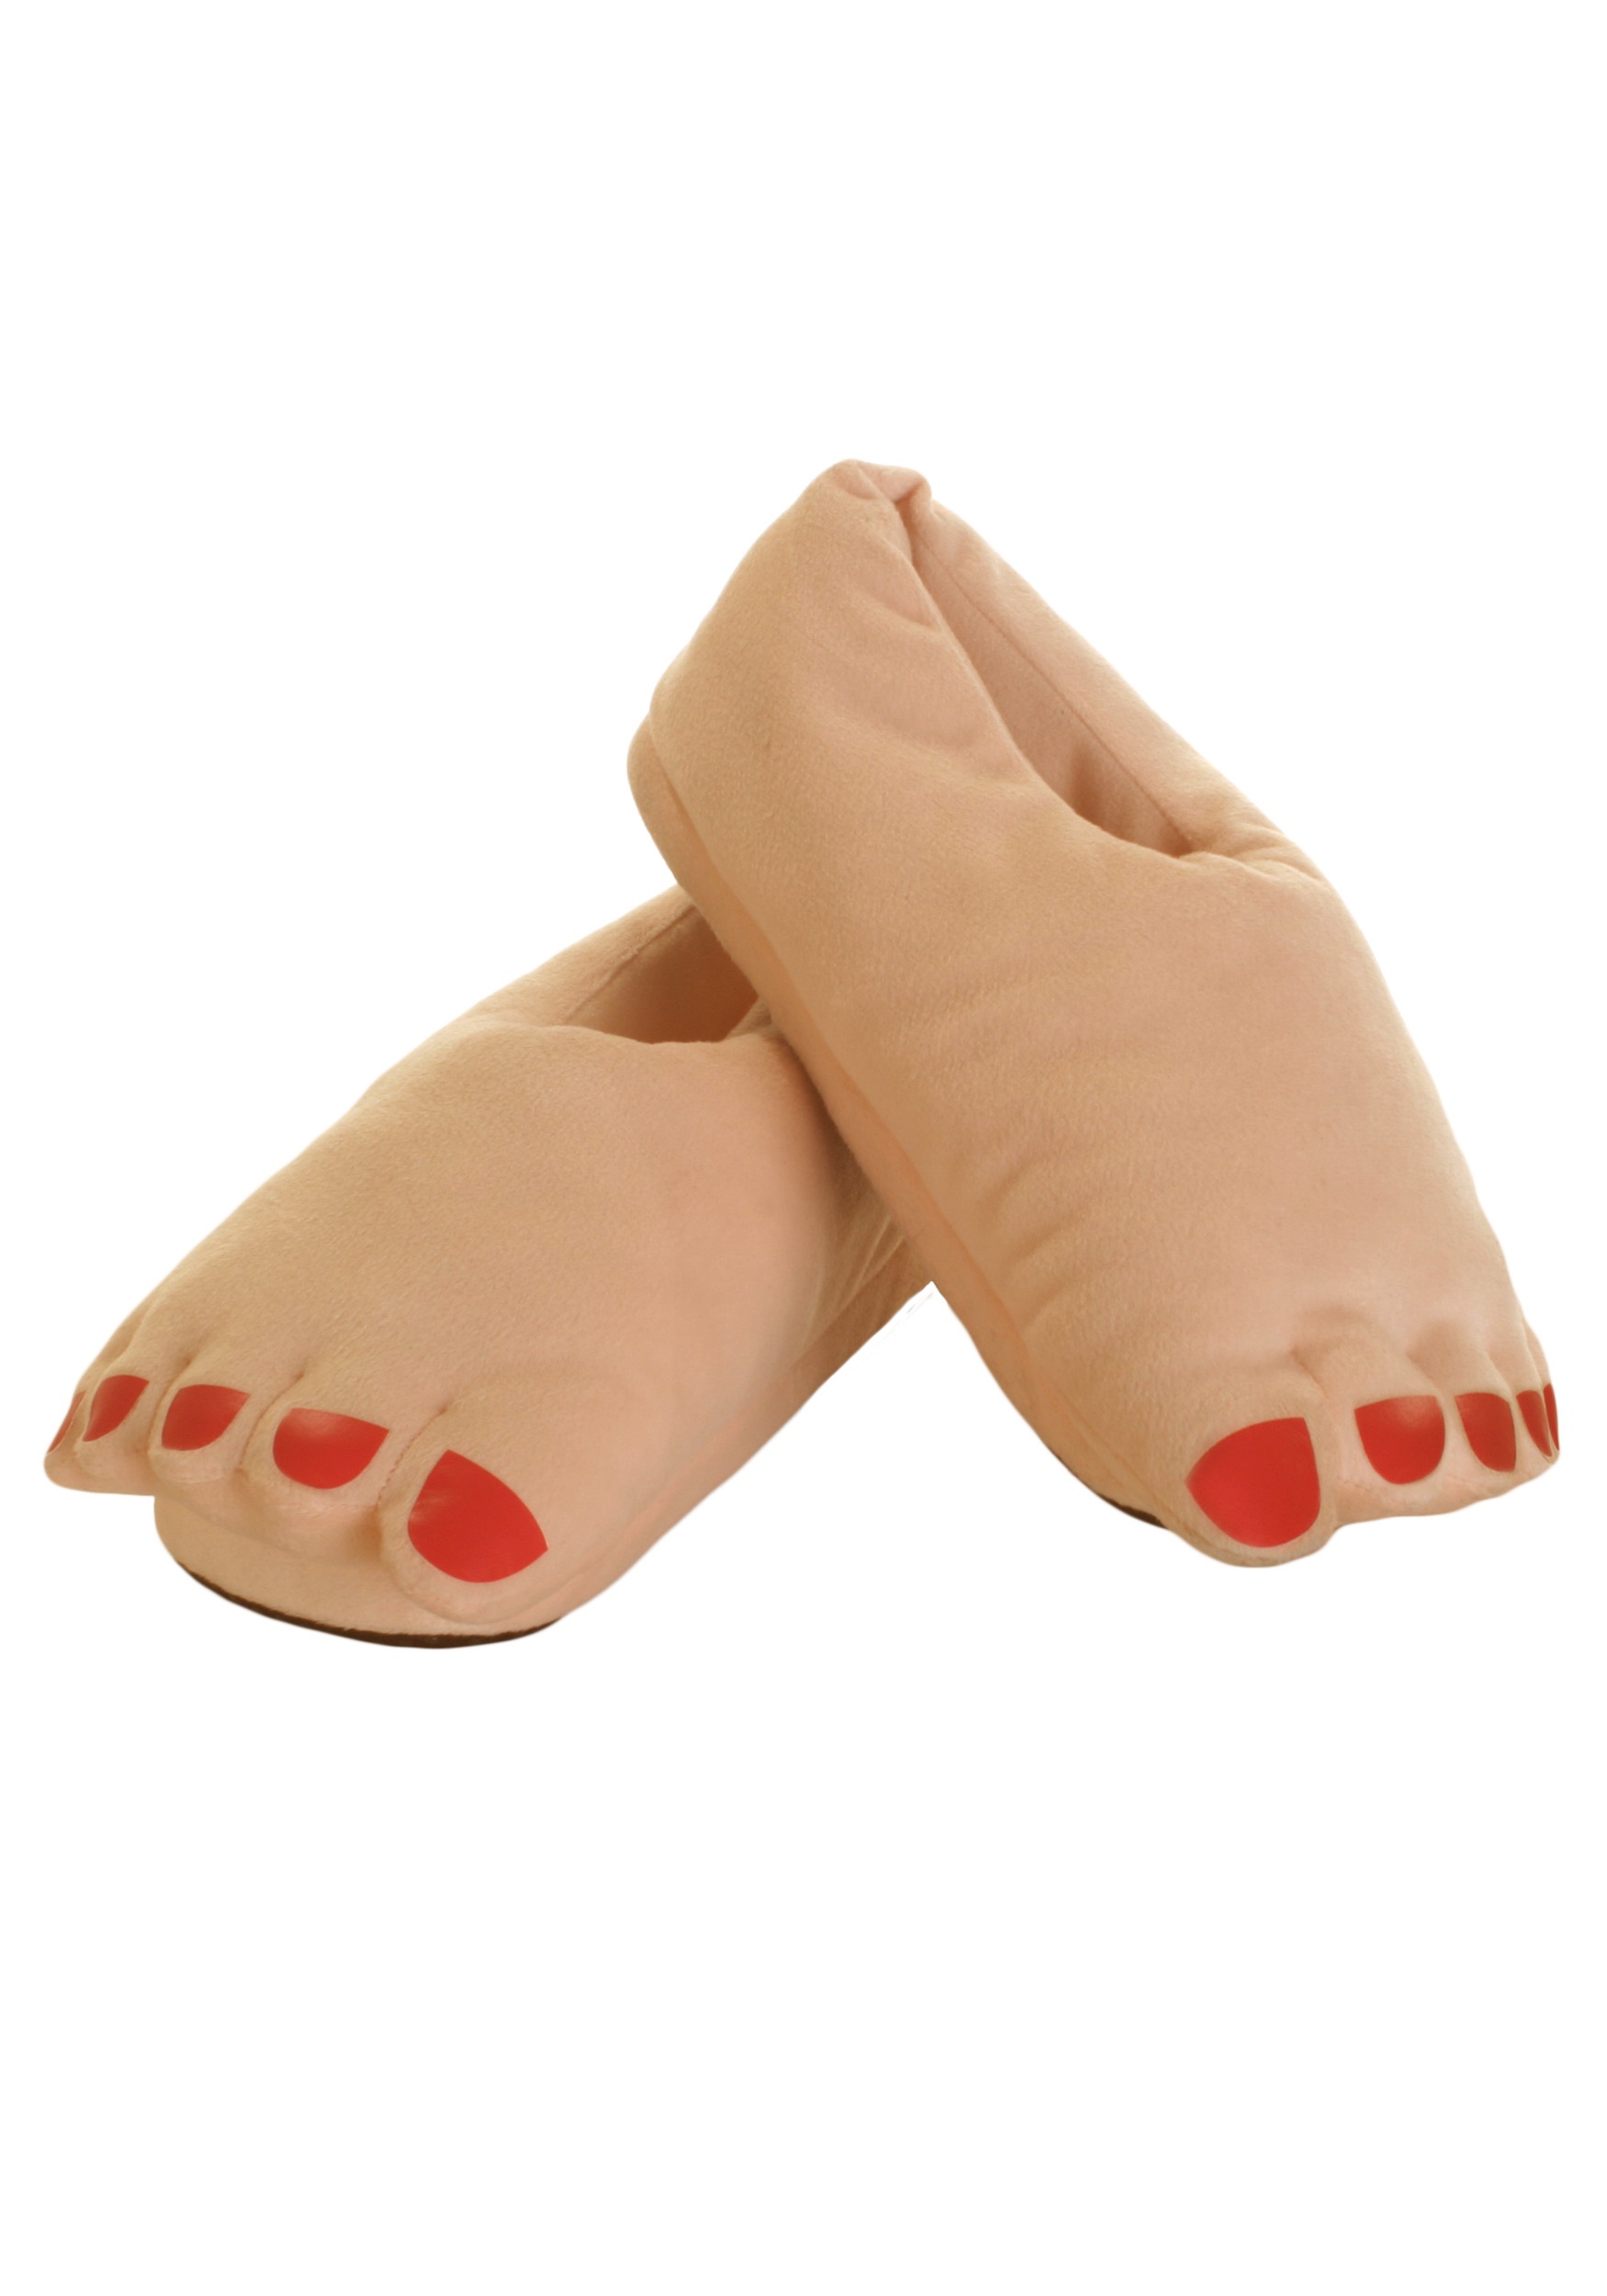 Caveman Feet for Women